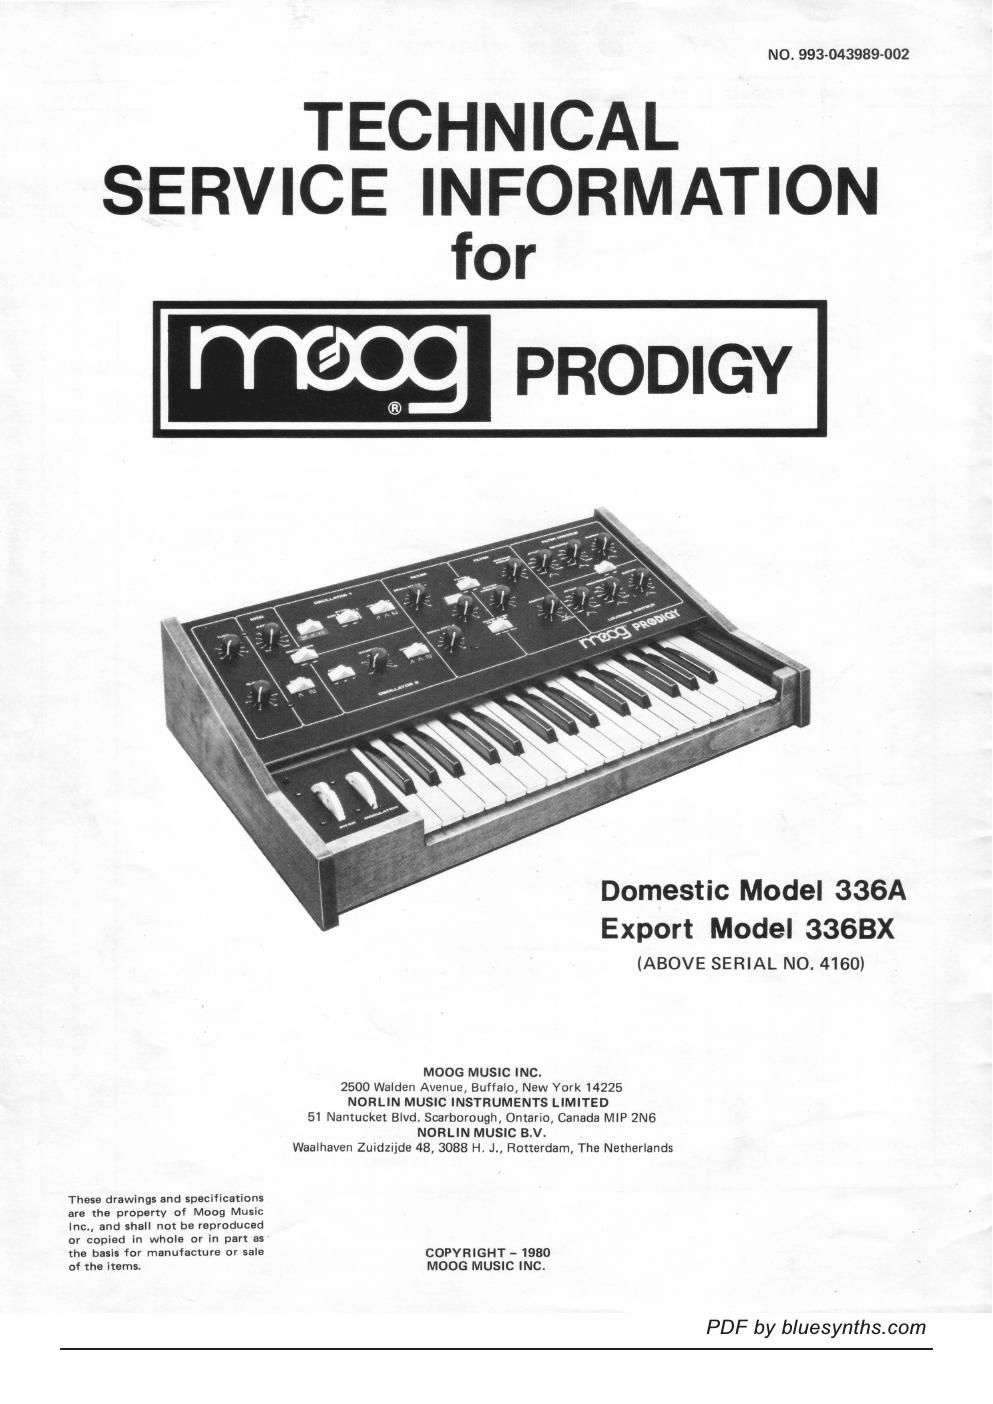 moog prodigy technical service information